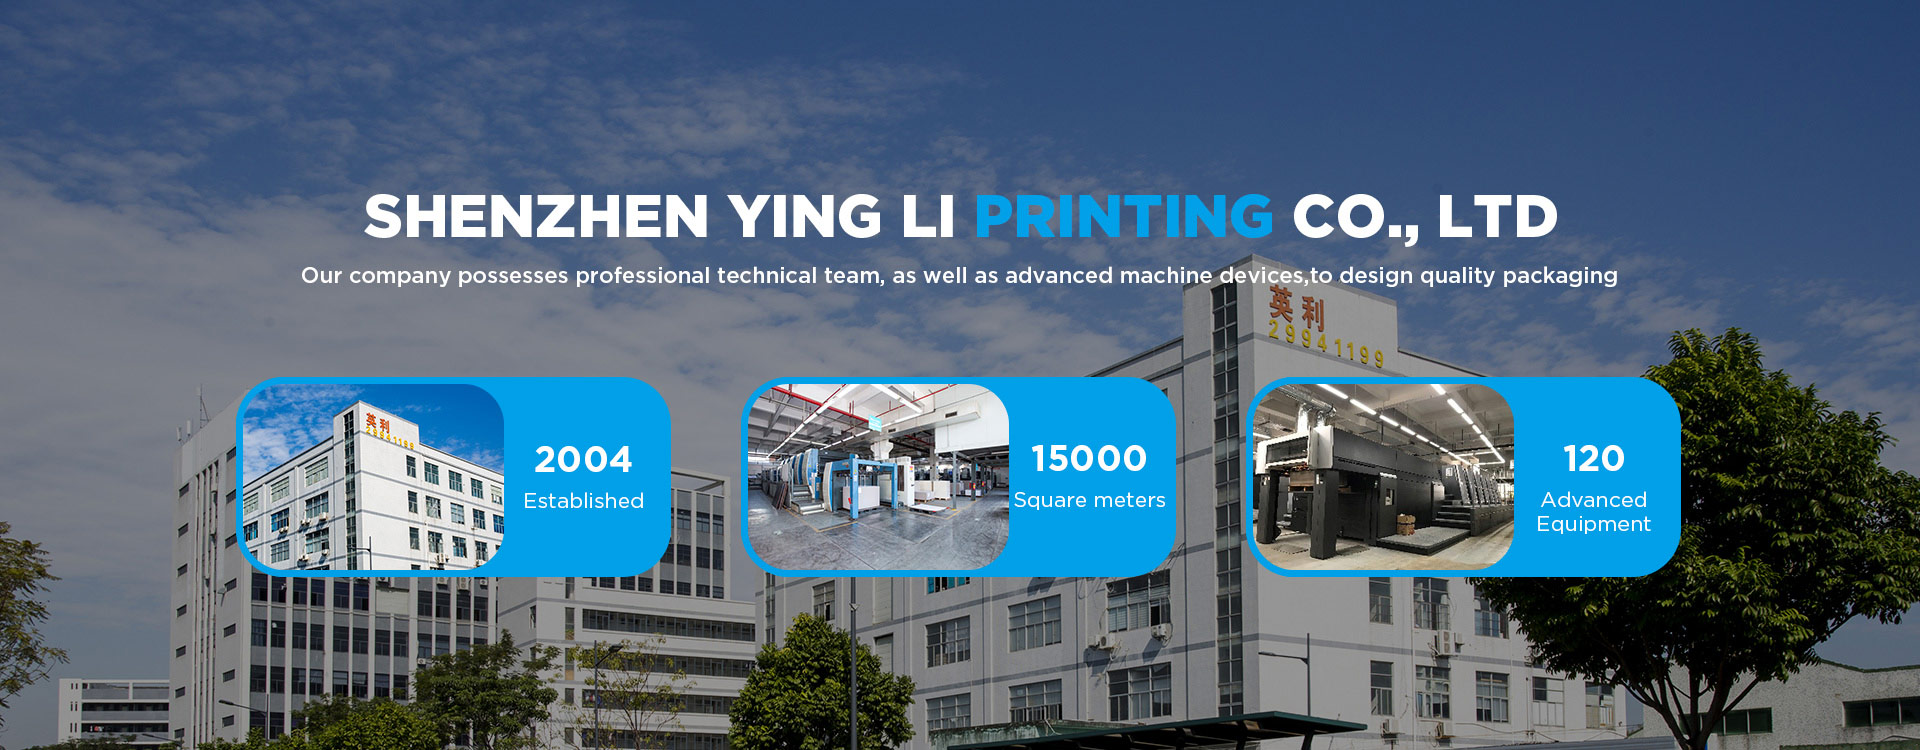 Shenzhen Ying Li Printing Co., Ltd